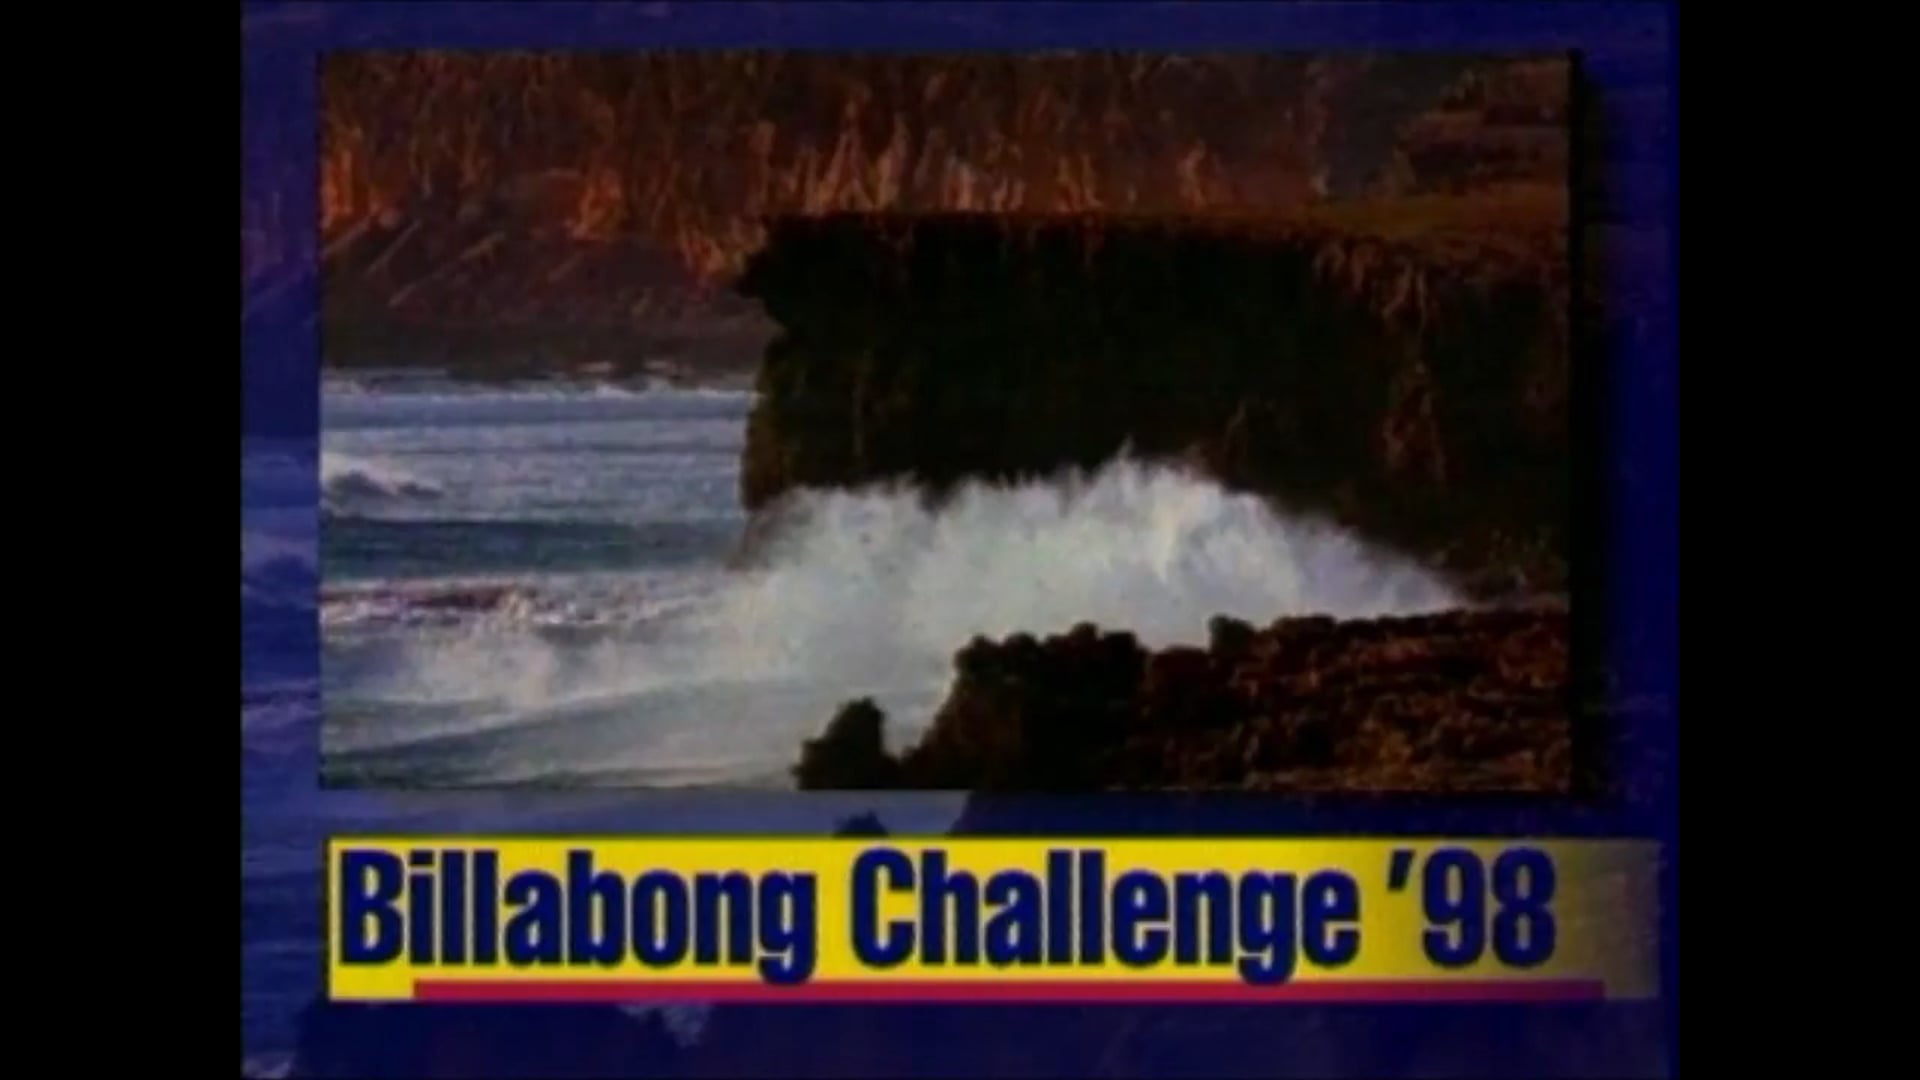 Surfing History: 98 Billabong Challenge